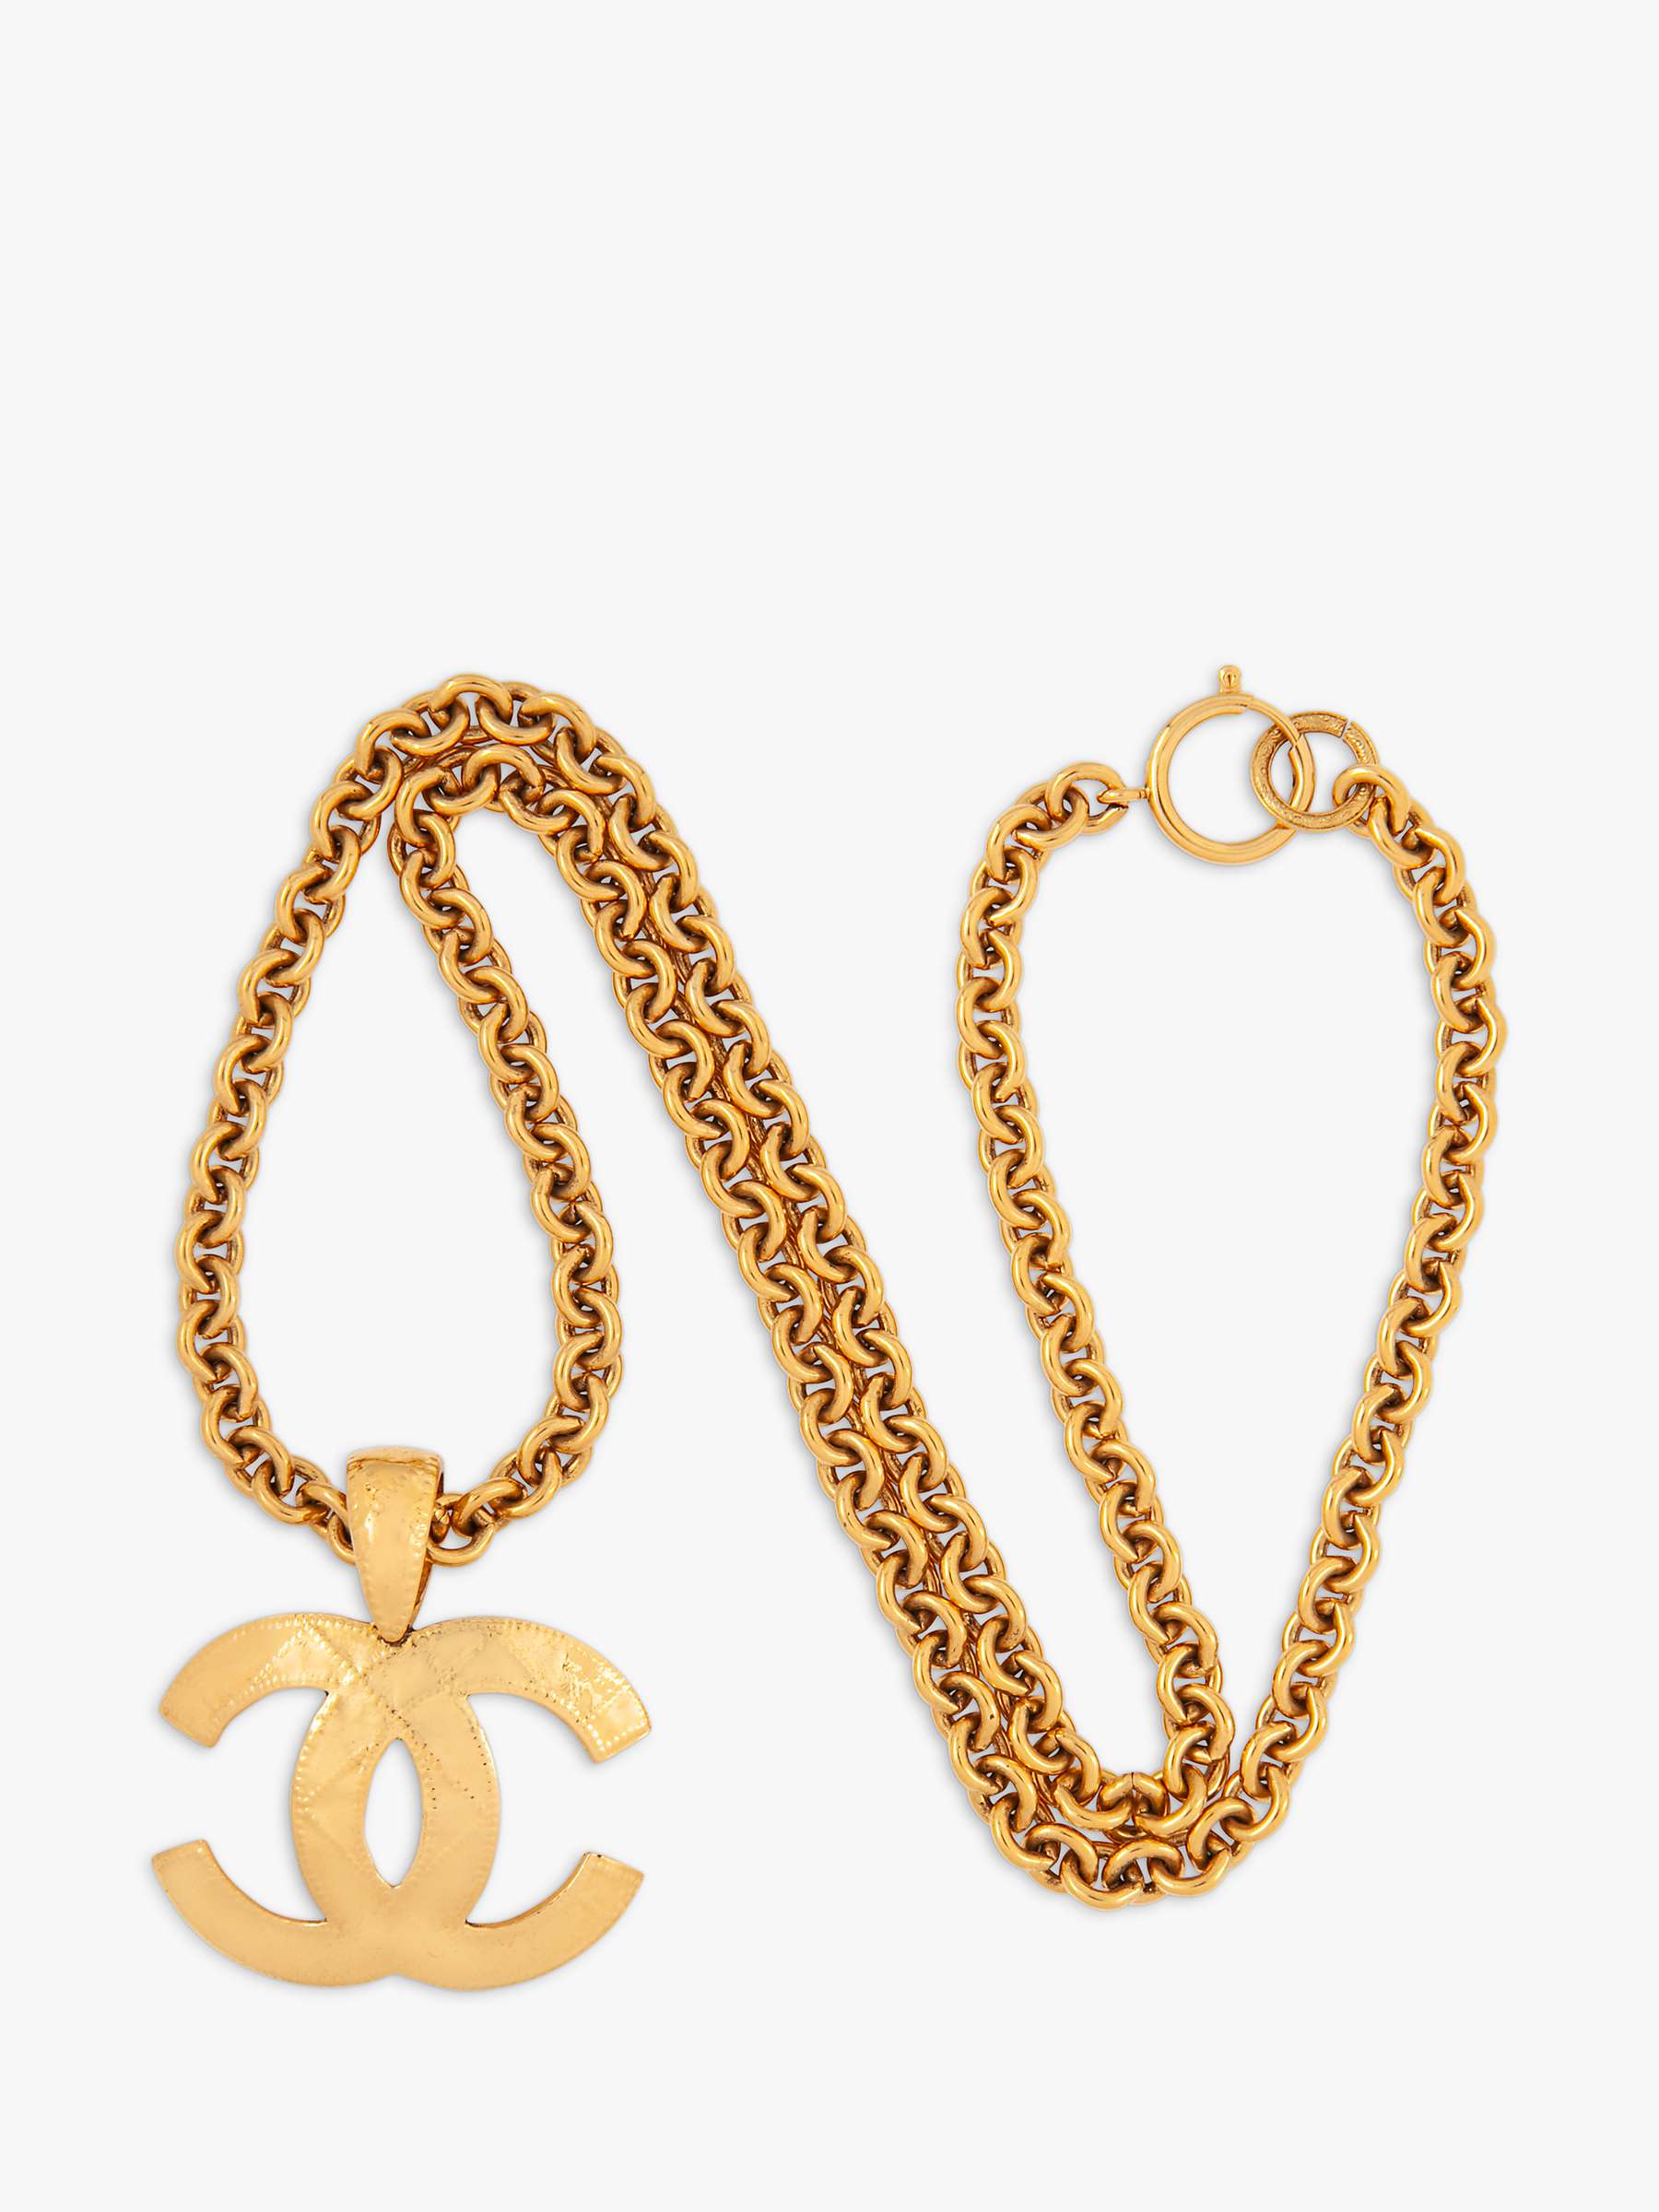 Buy Susan Caplan Vintage Chanel Quilted Logo Pendant Necklace Online at johnlewis.com